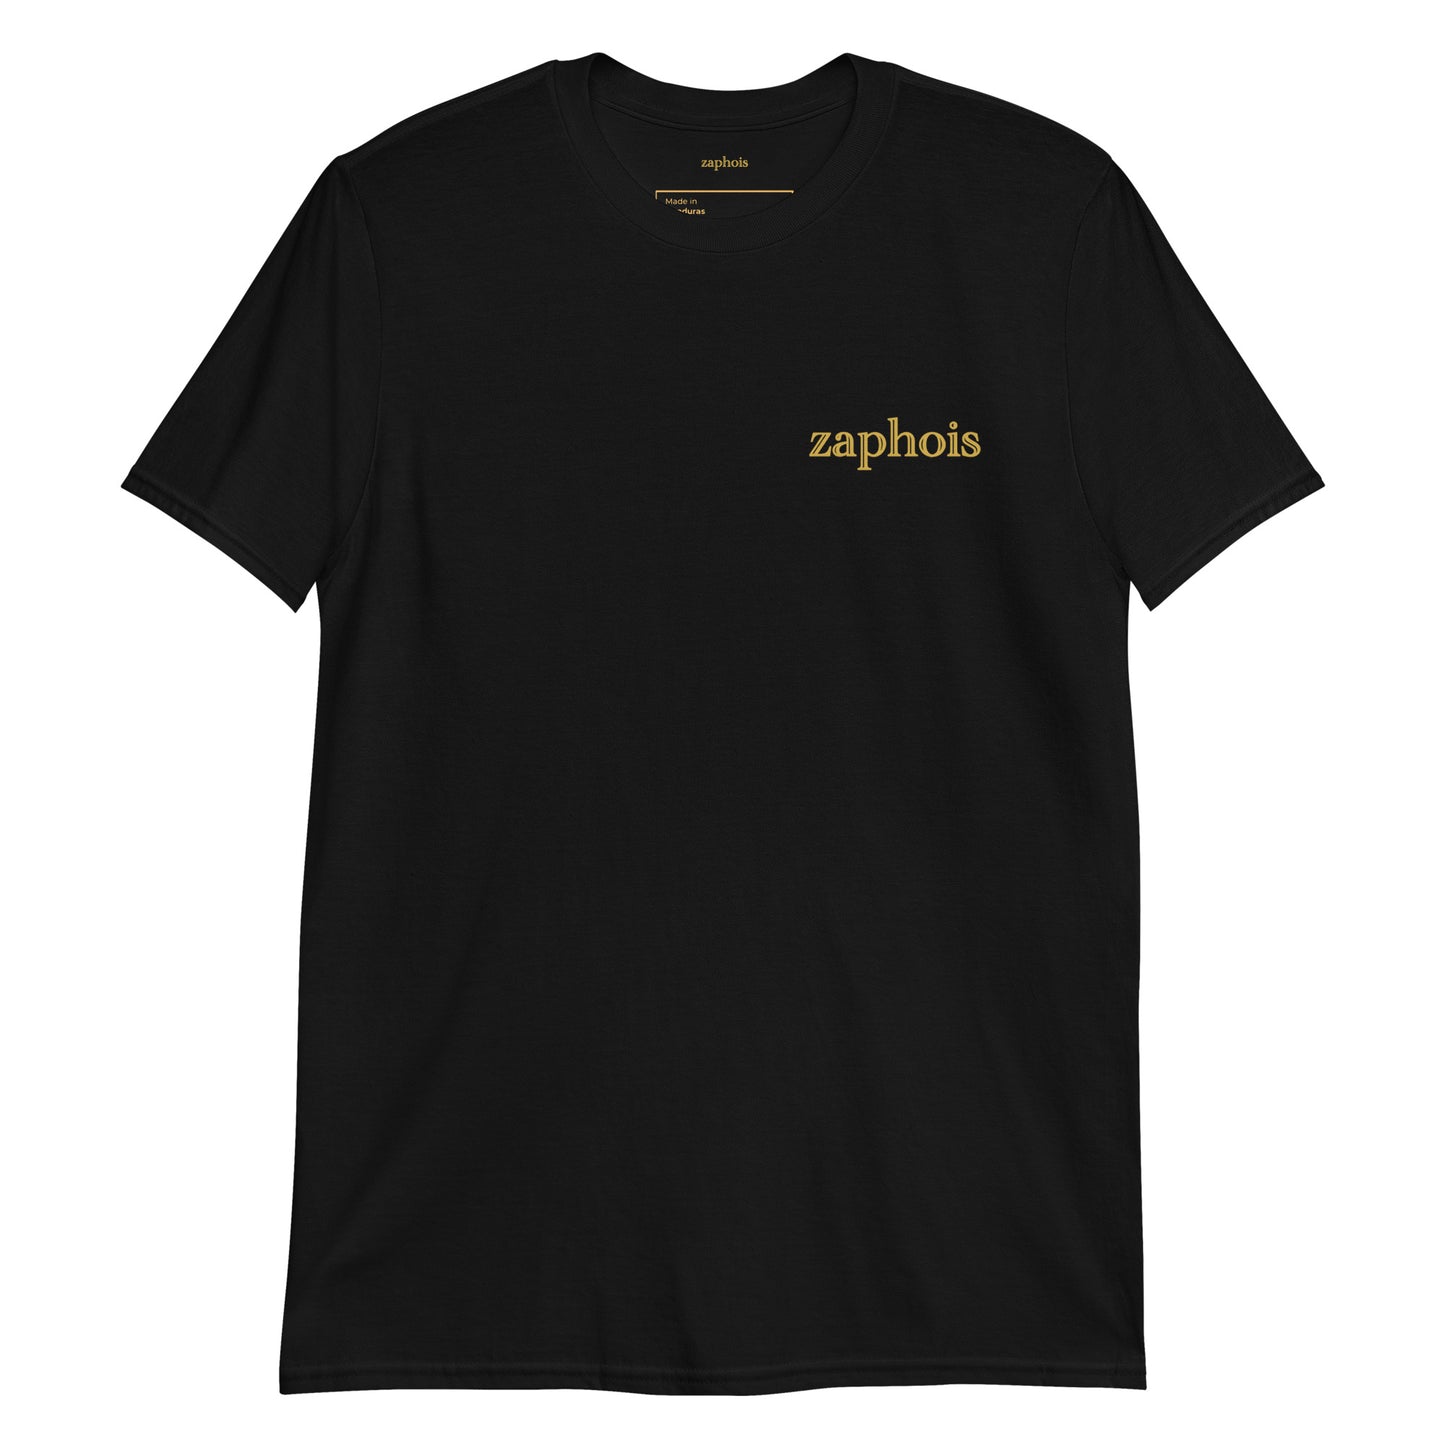 zaphois simplicity shirt